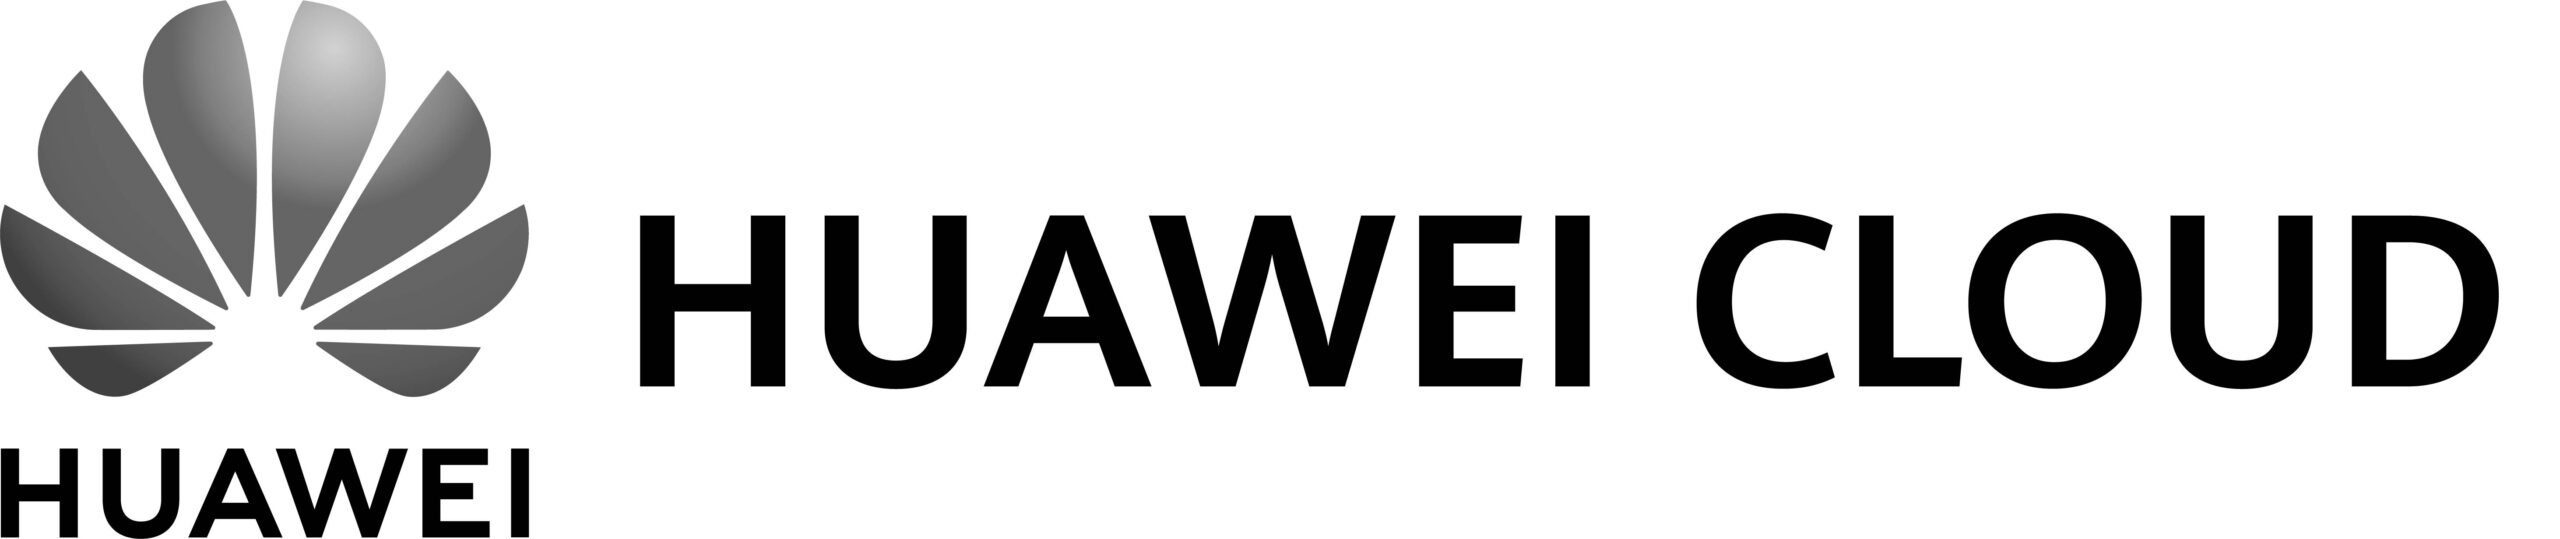 Huawei Cloud-logo black white